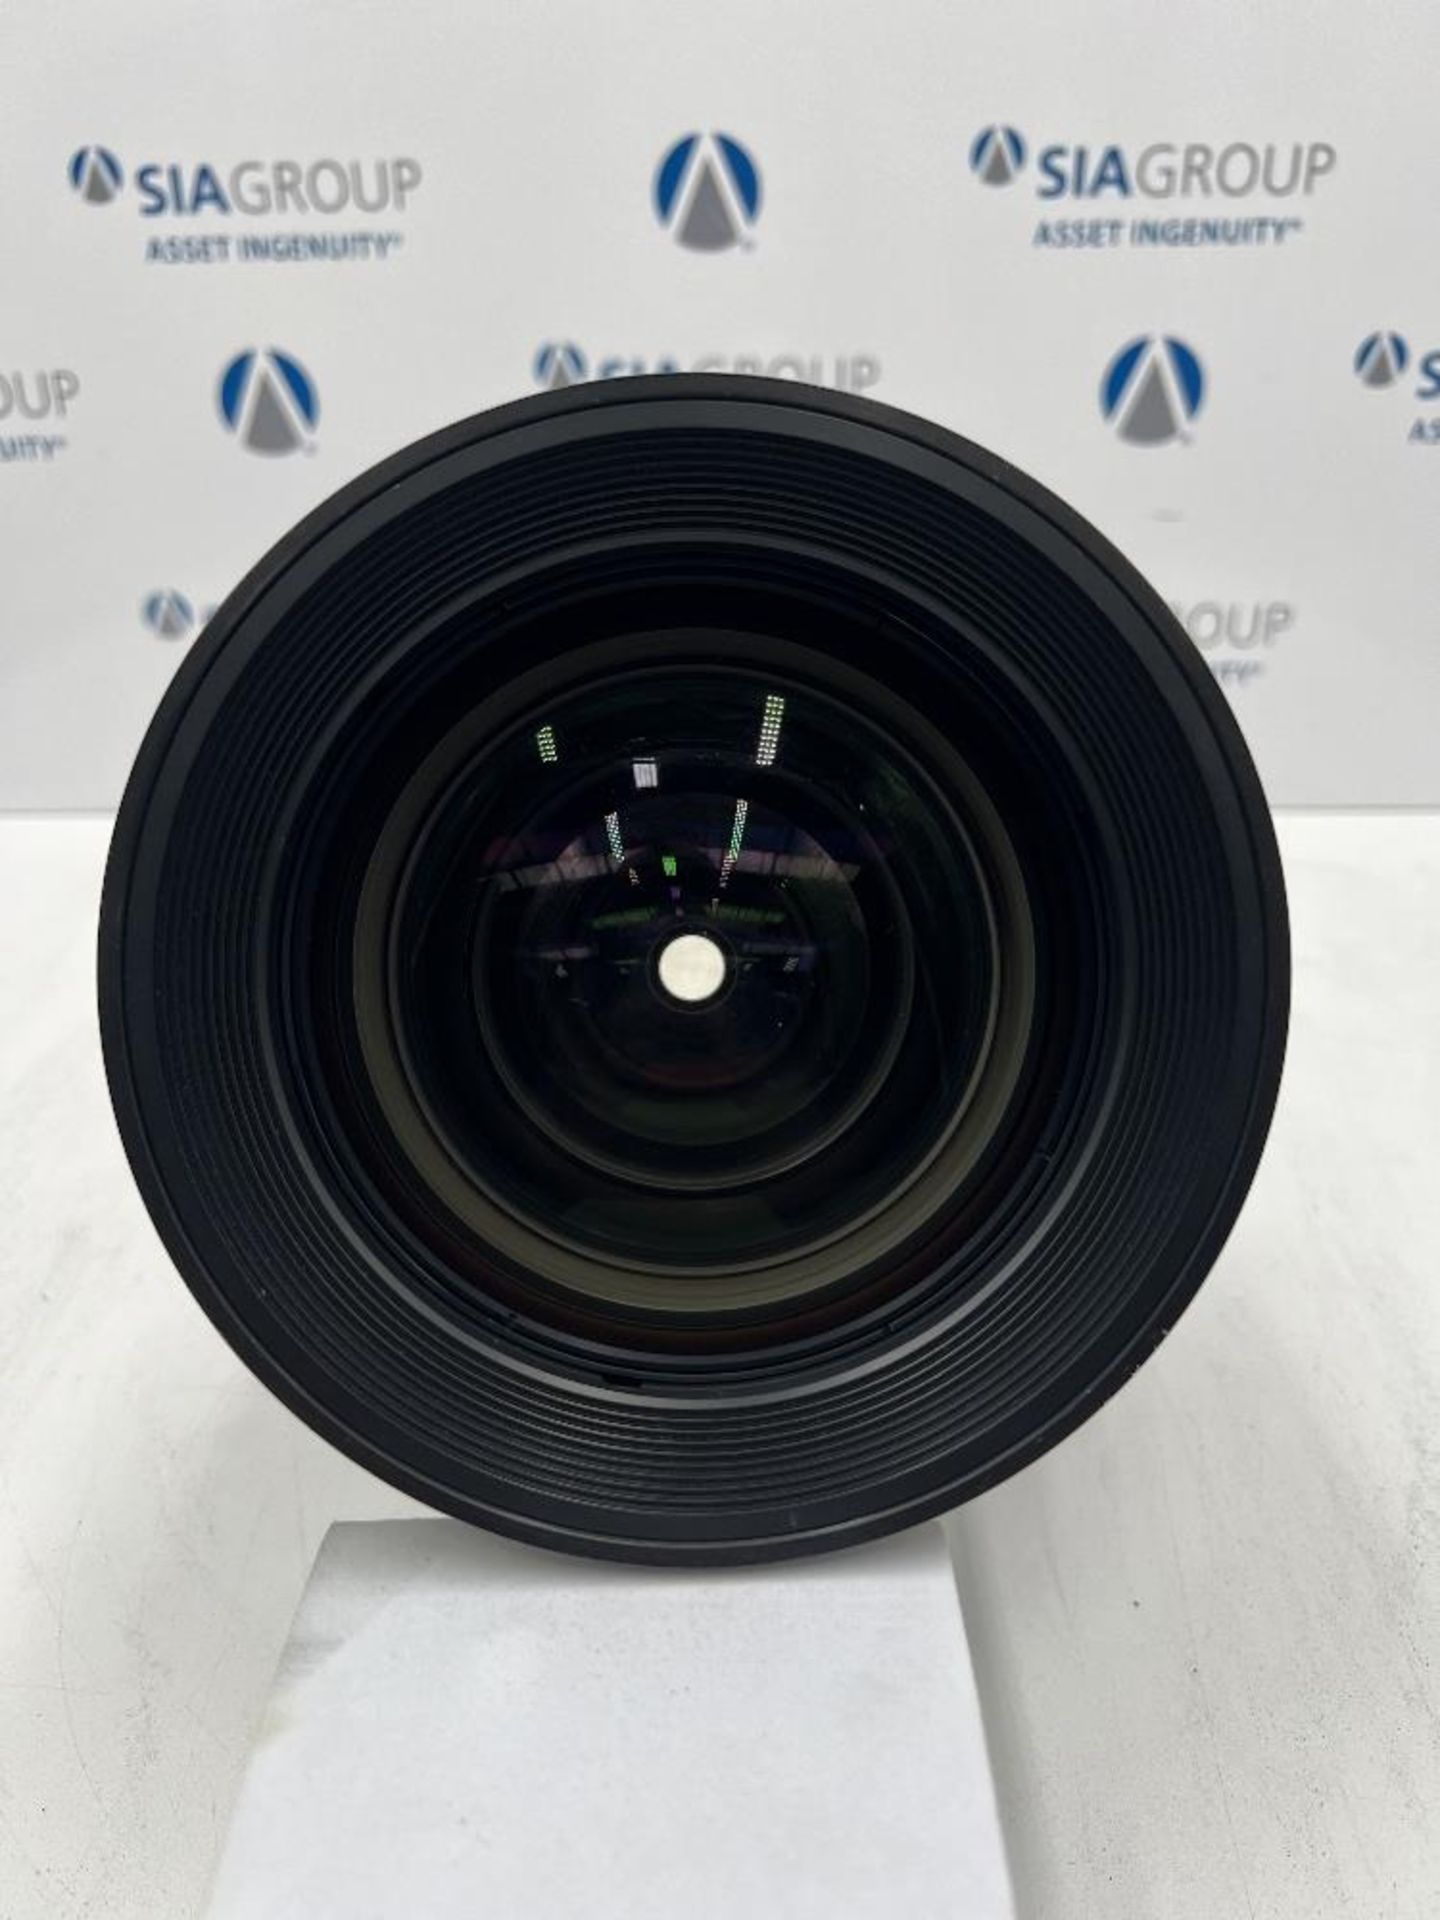 Panasonic ET-D75LE10 1.3-1.7 Zoom Lens With Carrier Case - Image 6 of 9